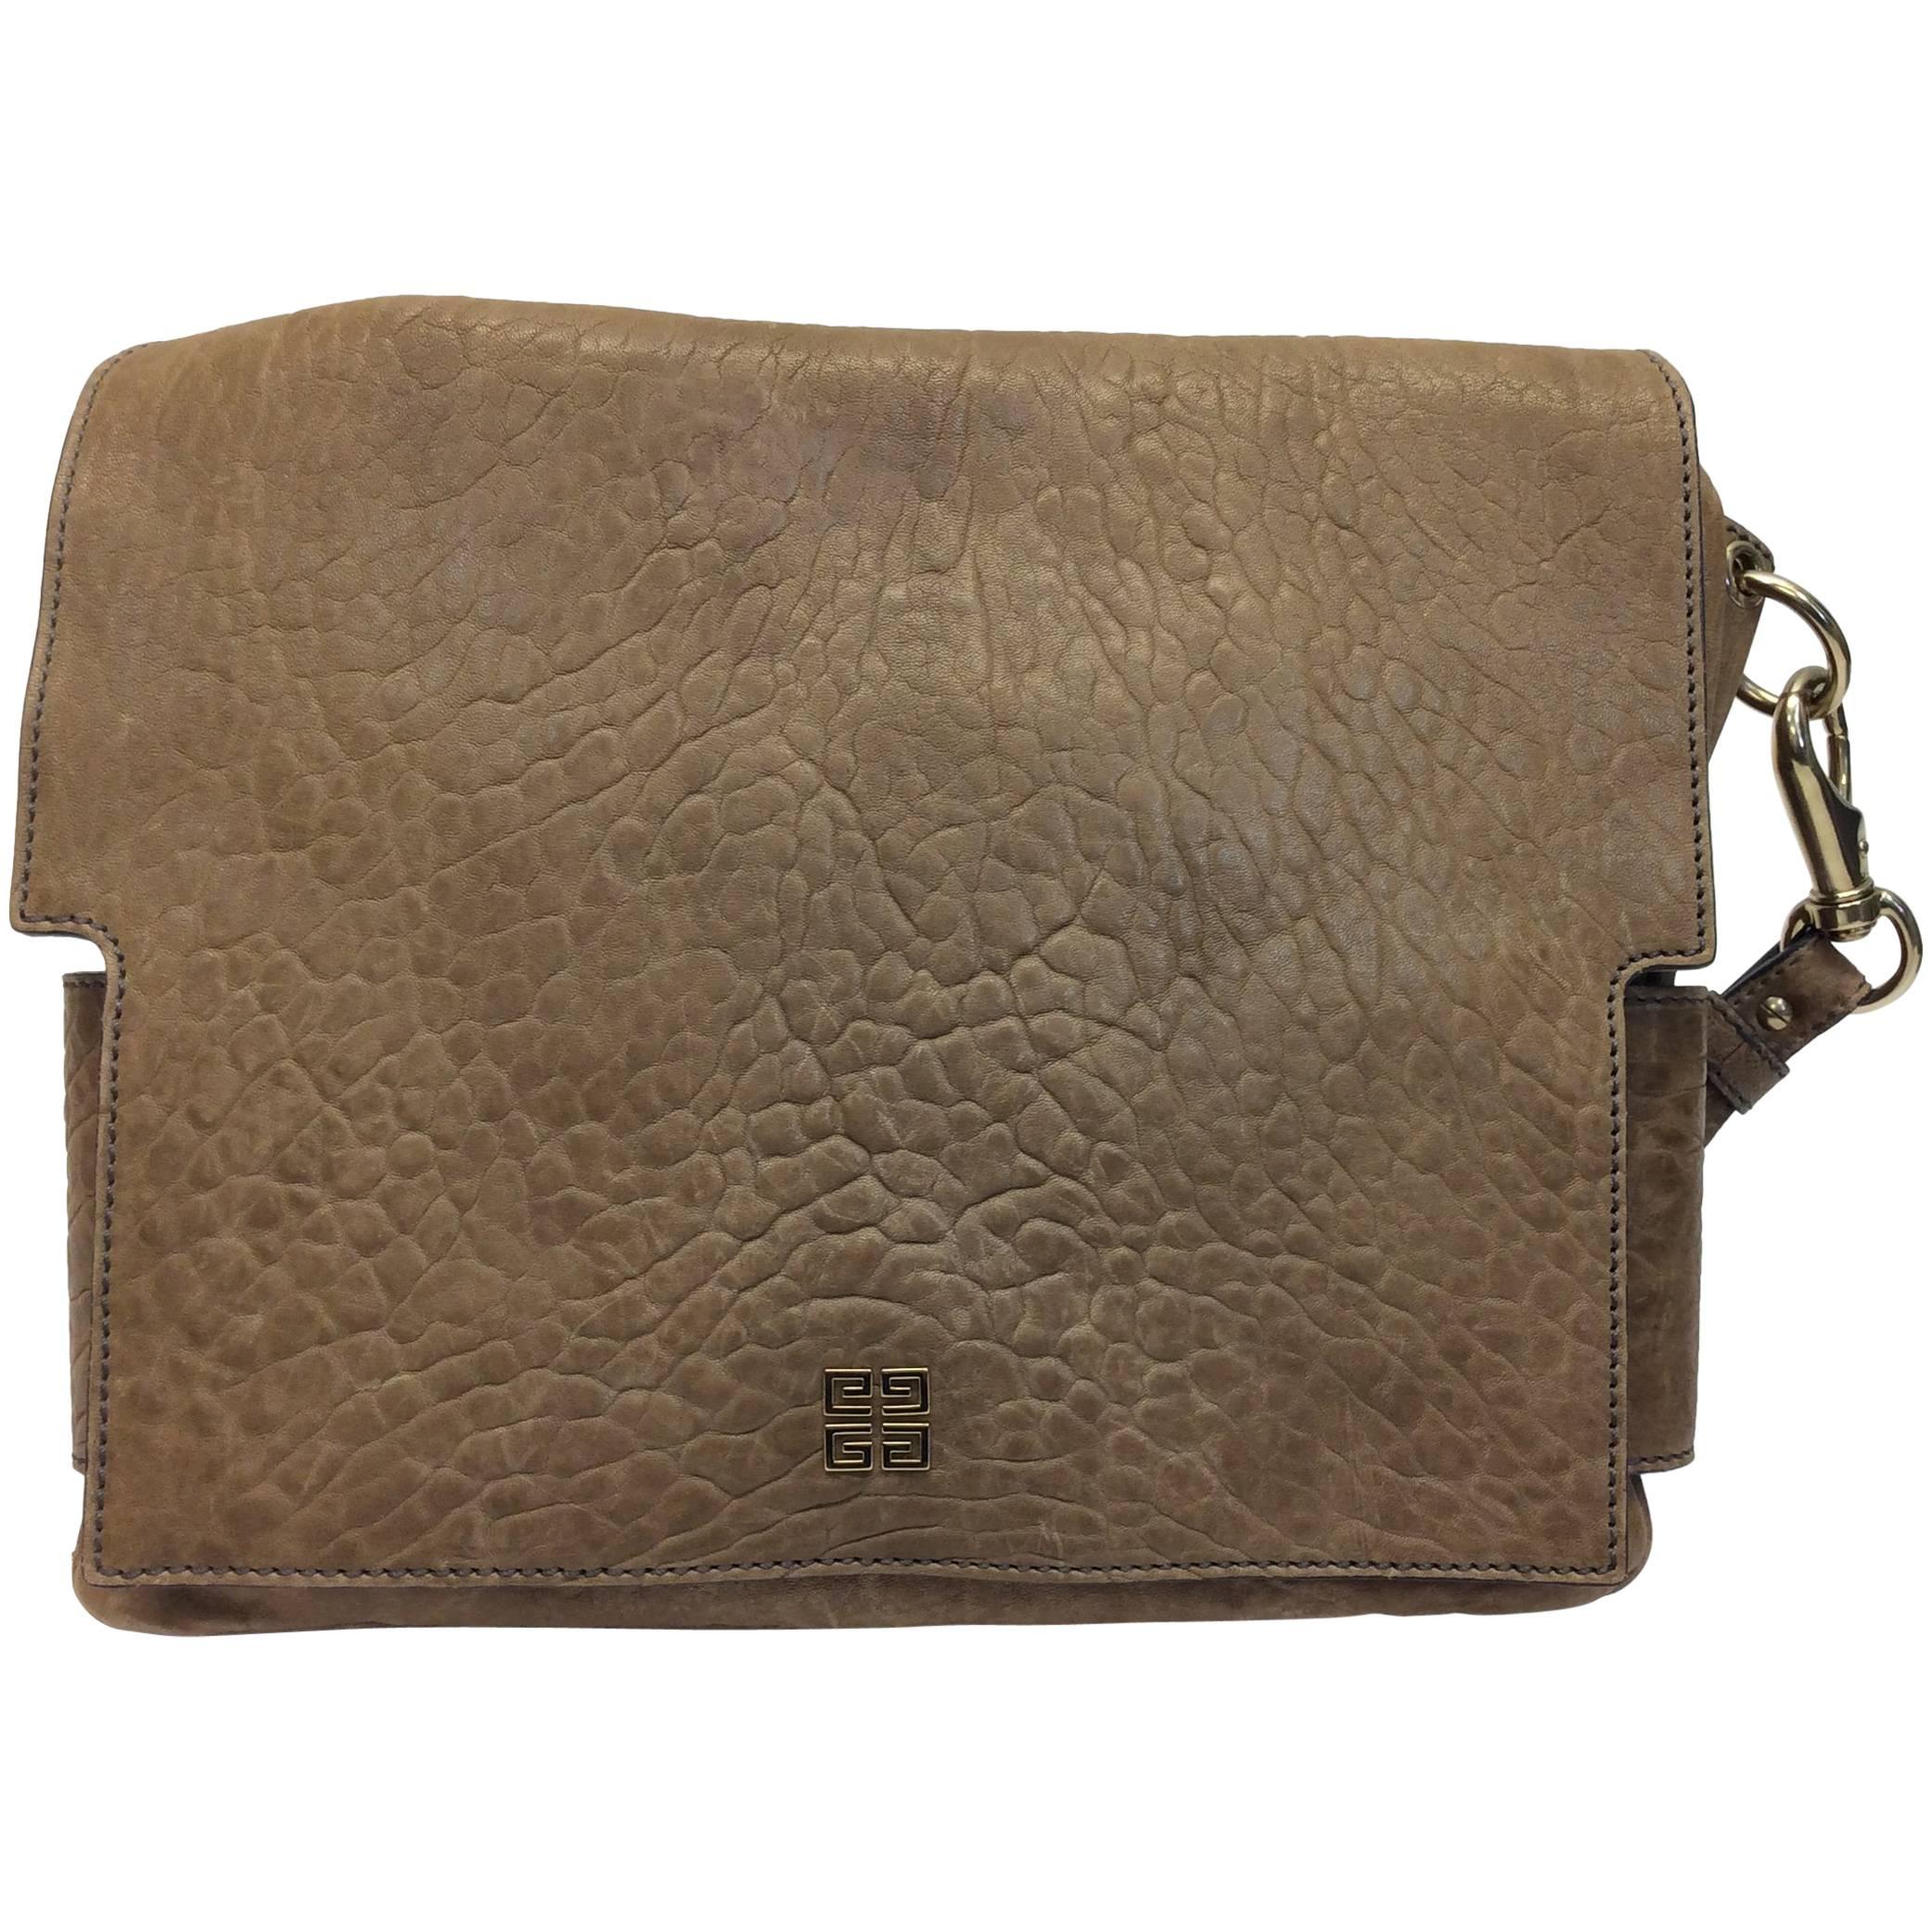 Givenchy Leather Camel Handbag For Sale